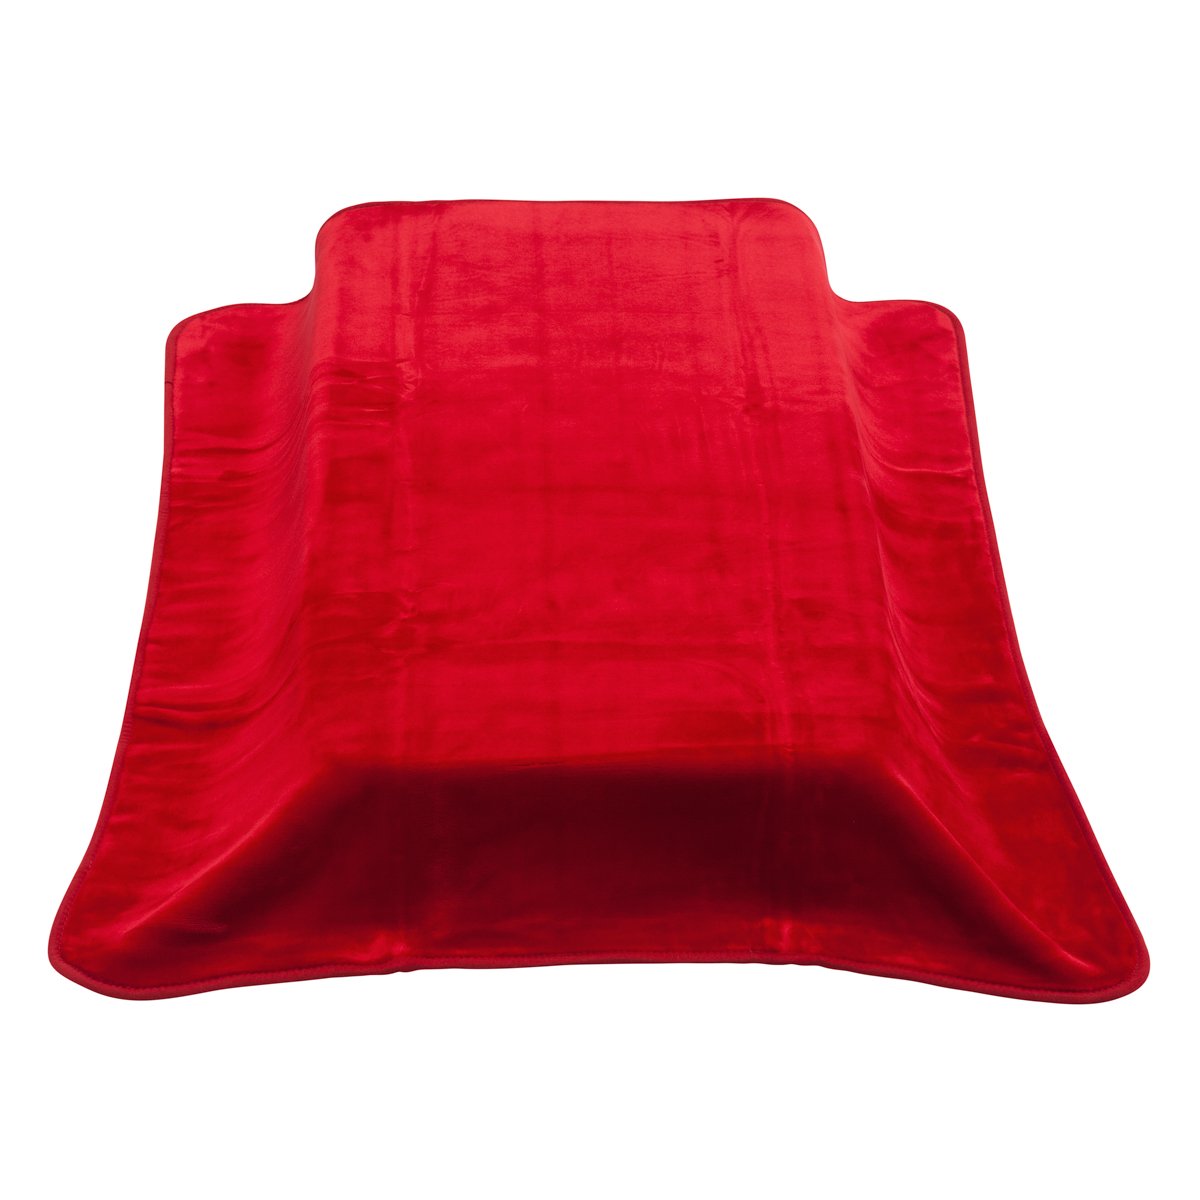 Cambrass 37979 Raschel Be Solid Rojo Blanket 110 x 140 cm Red